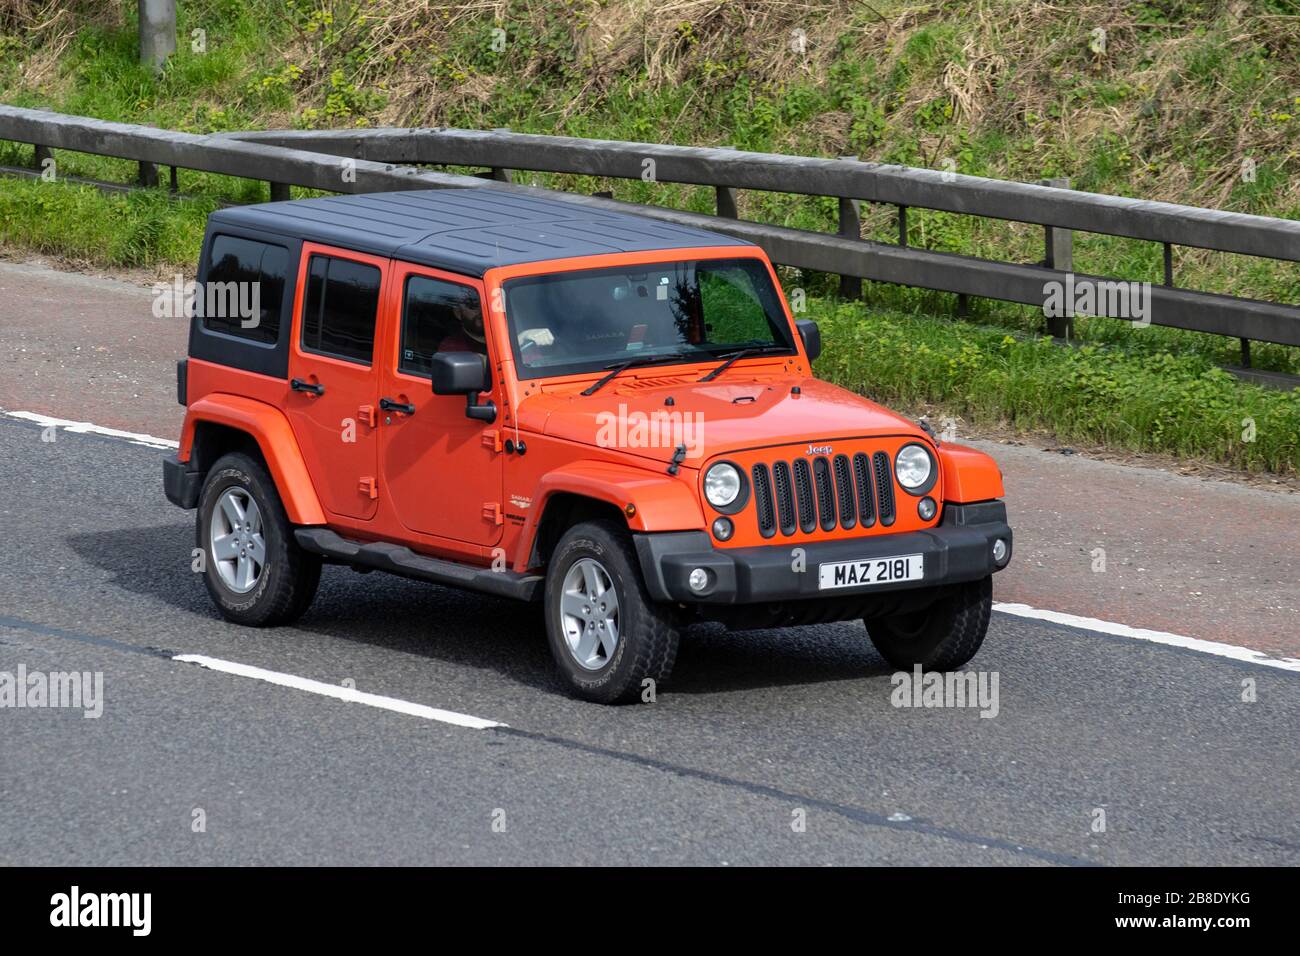 2015 Orange Jeep Wrangler Sahara UN-Ltd CR; UK Fahrzeugverkehr, Transport, Fahrzeuge bewegen, Fahrzeug, Straßen, Motoren, Autofahren auf der Autobahn M6 Stockfoto